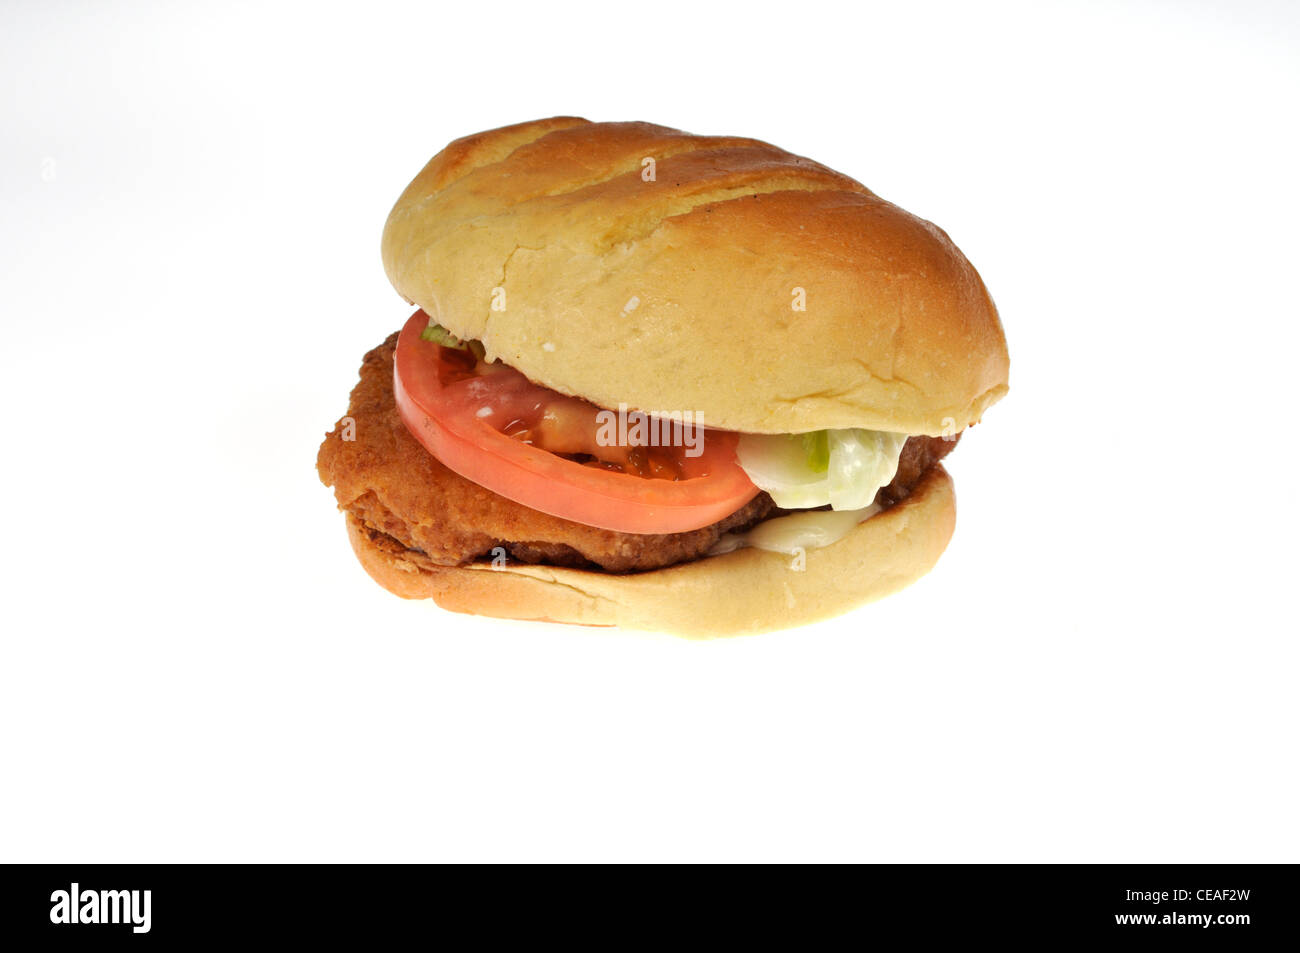 Burger King tendercrisp chicken sandwich con lechuga y tomate en rollo artesanal sobre fondo blanco recorte USA. Foto de stock